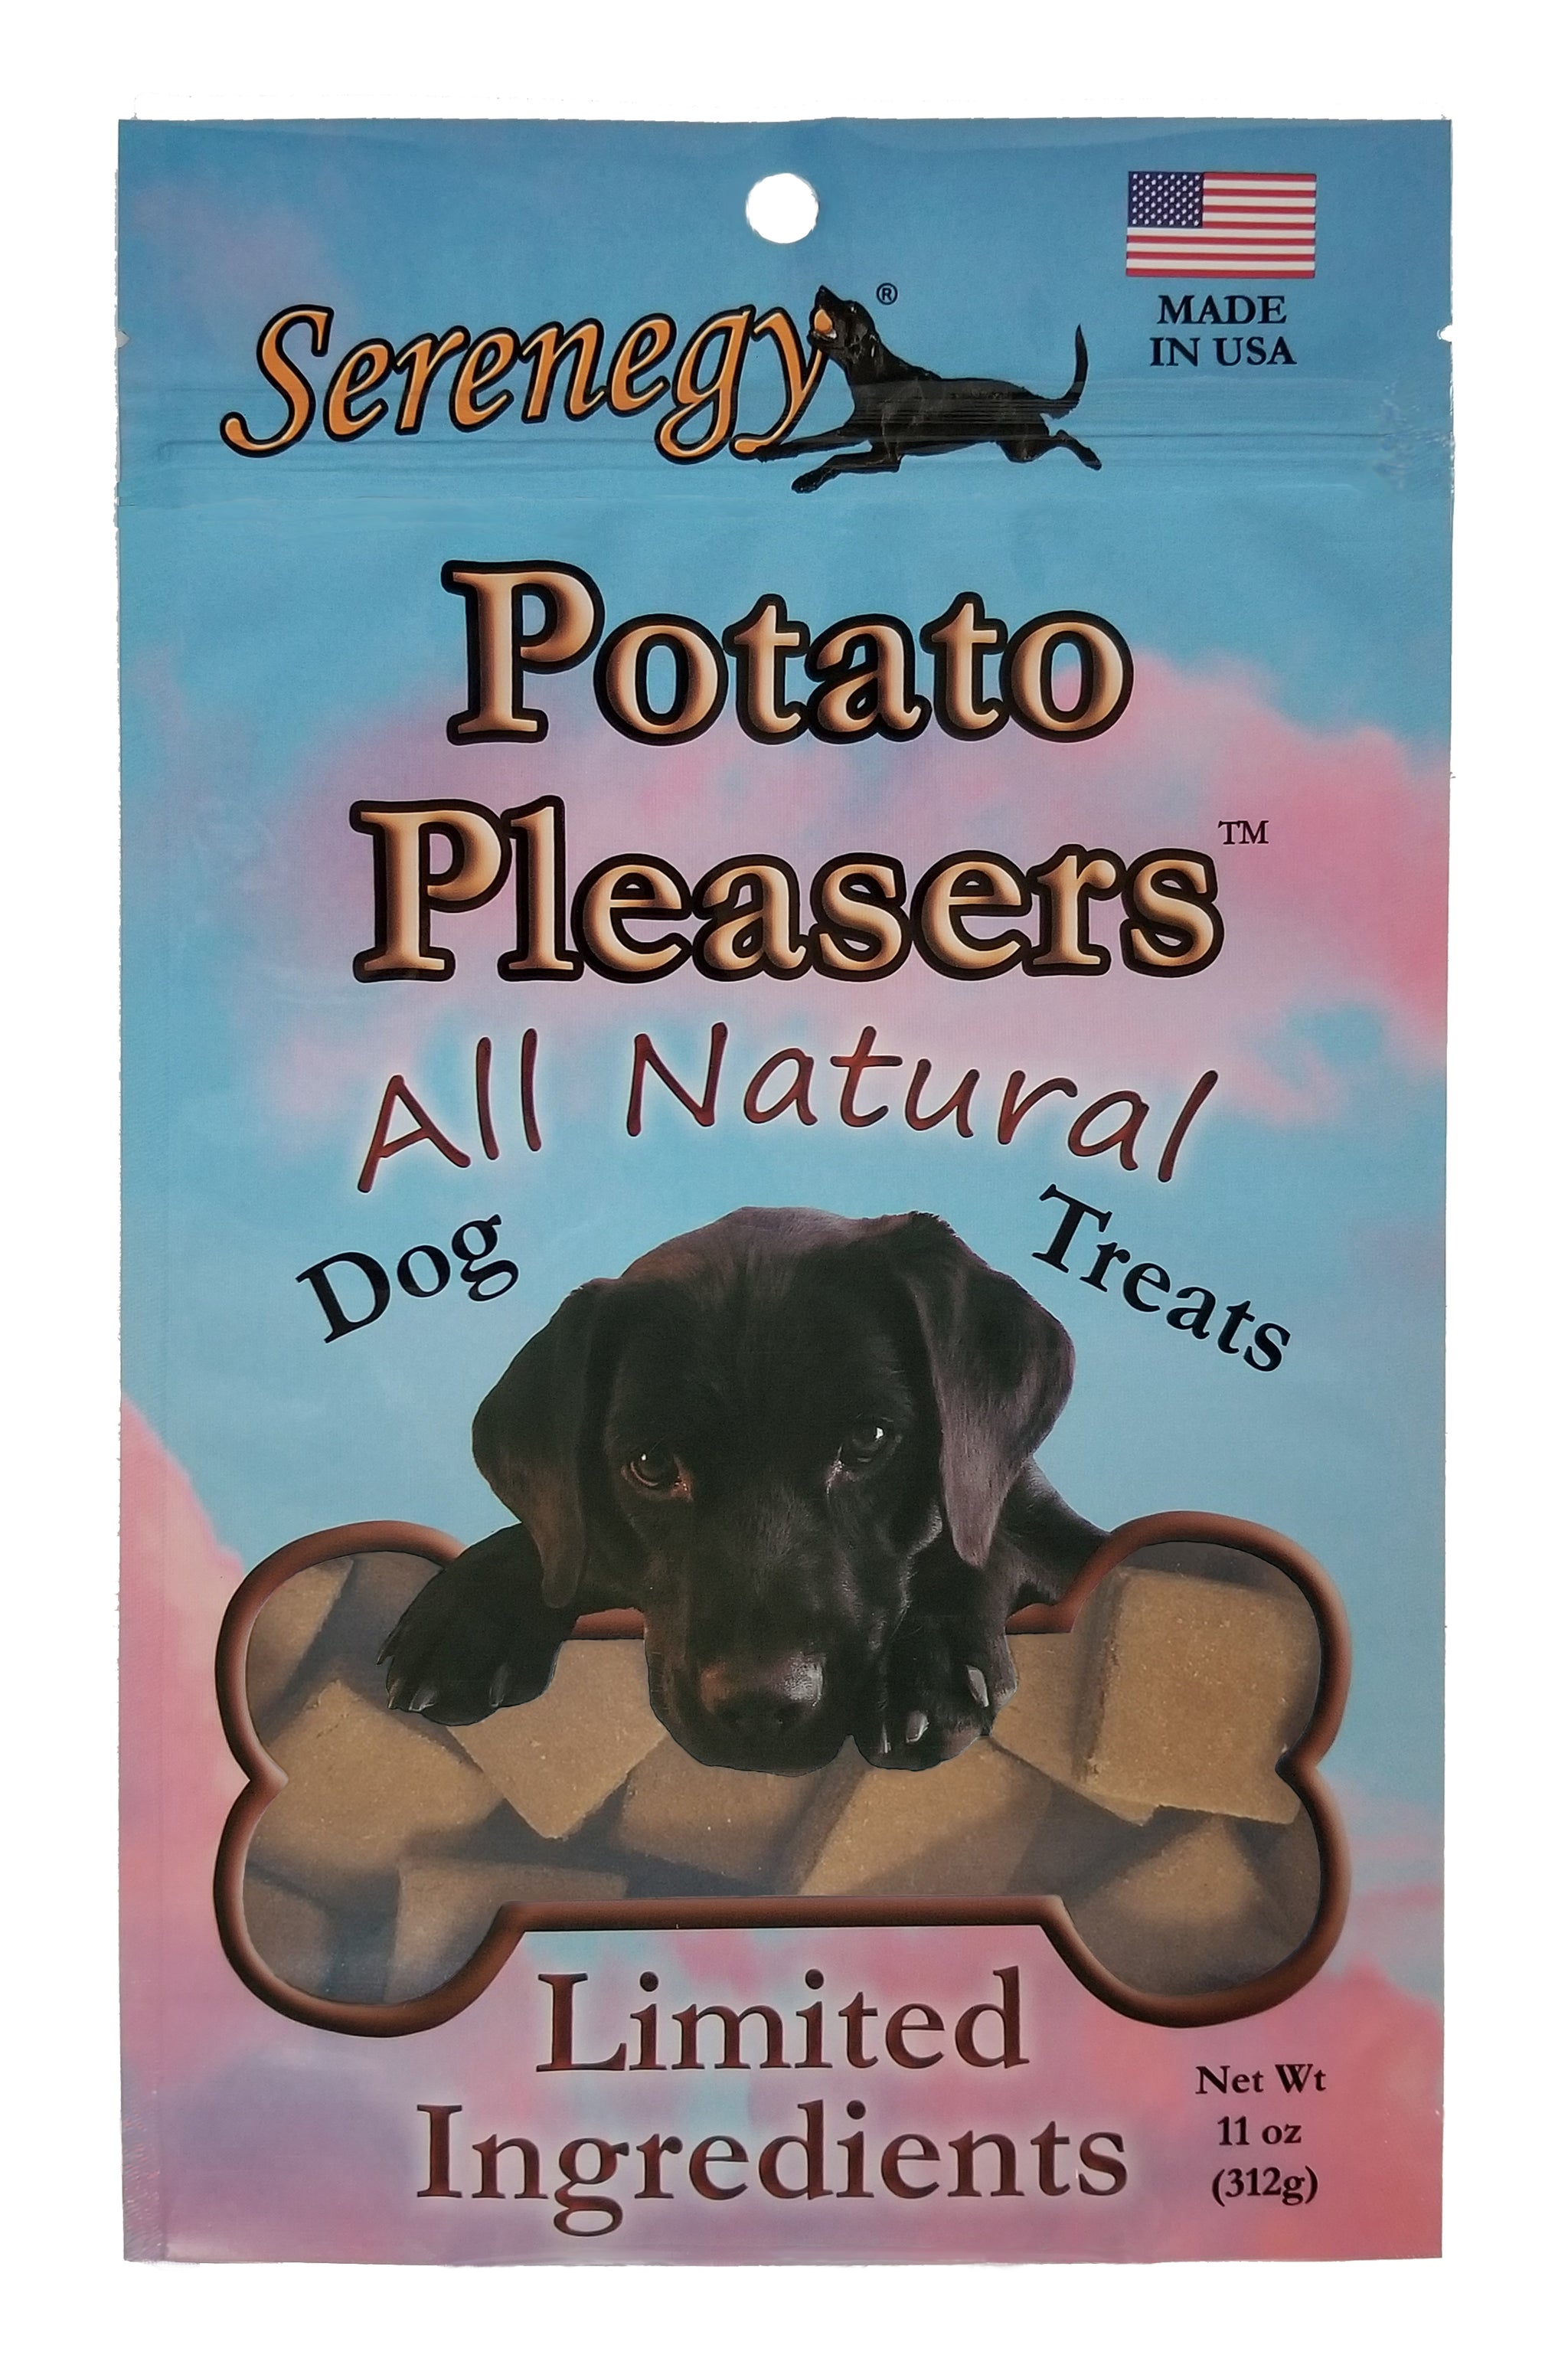 potato dog